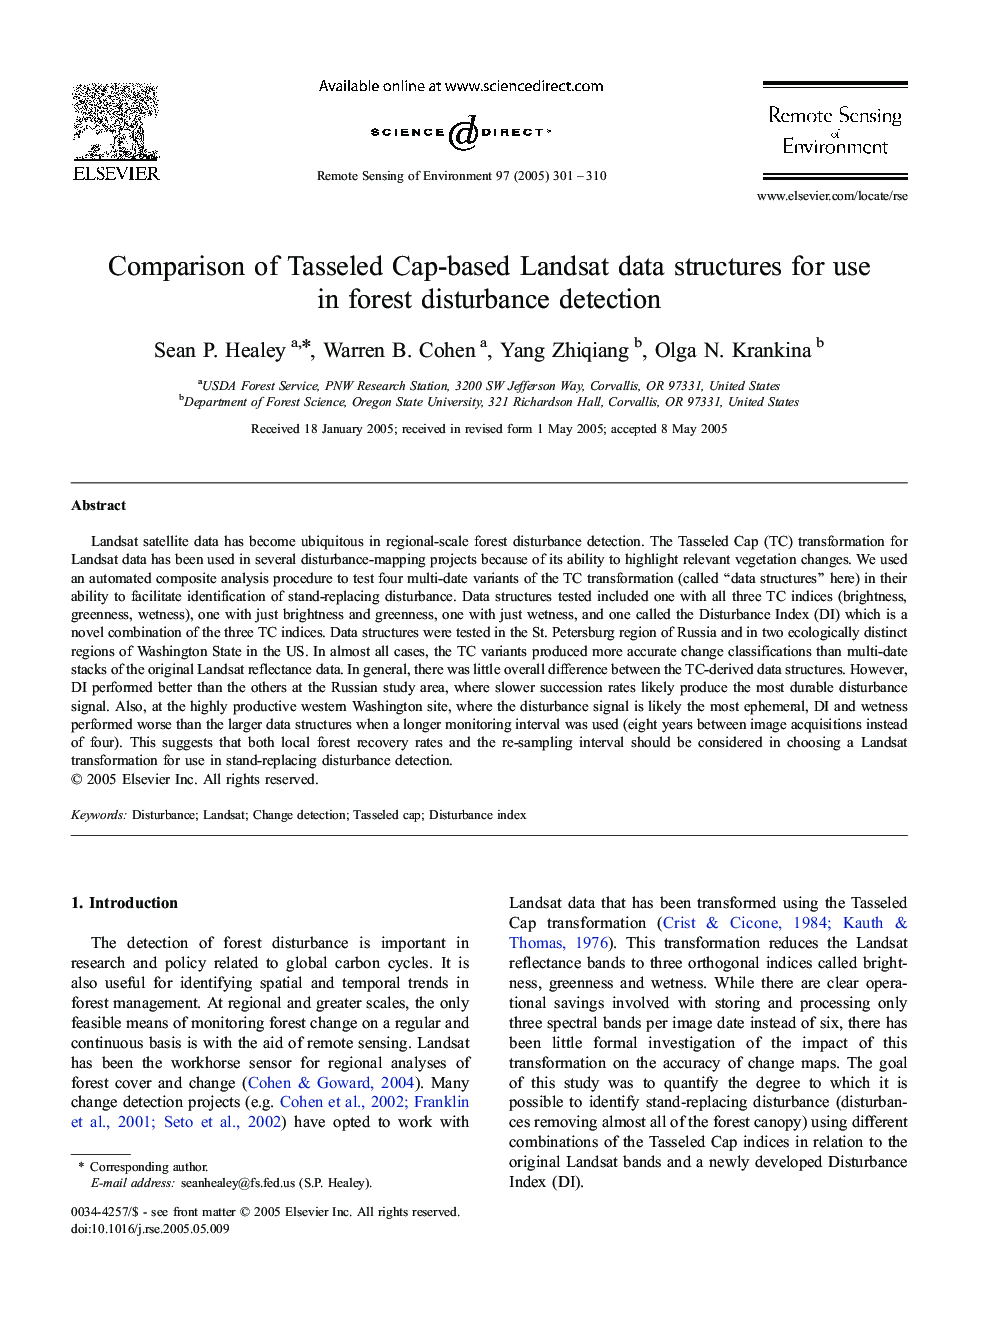 Comparison of Tasseled Cap-based Landsat data structures for use in forest disturbance detection